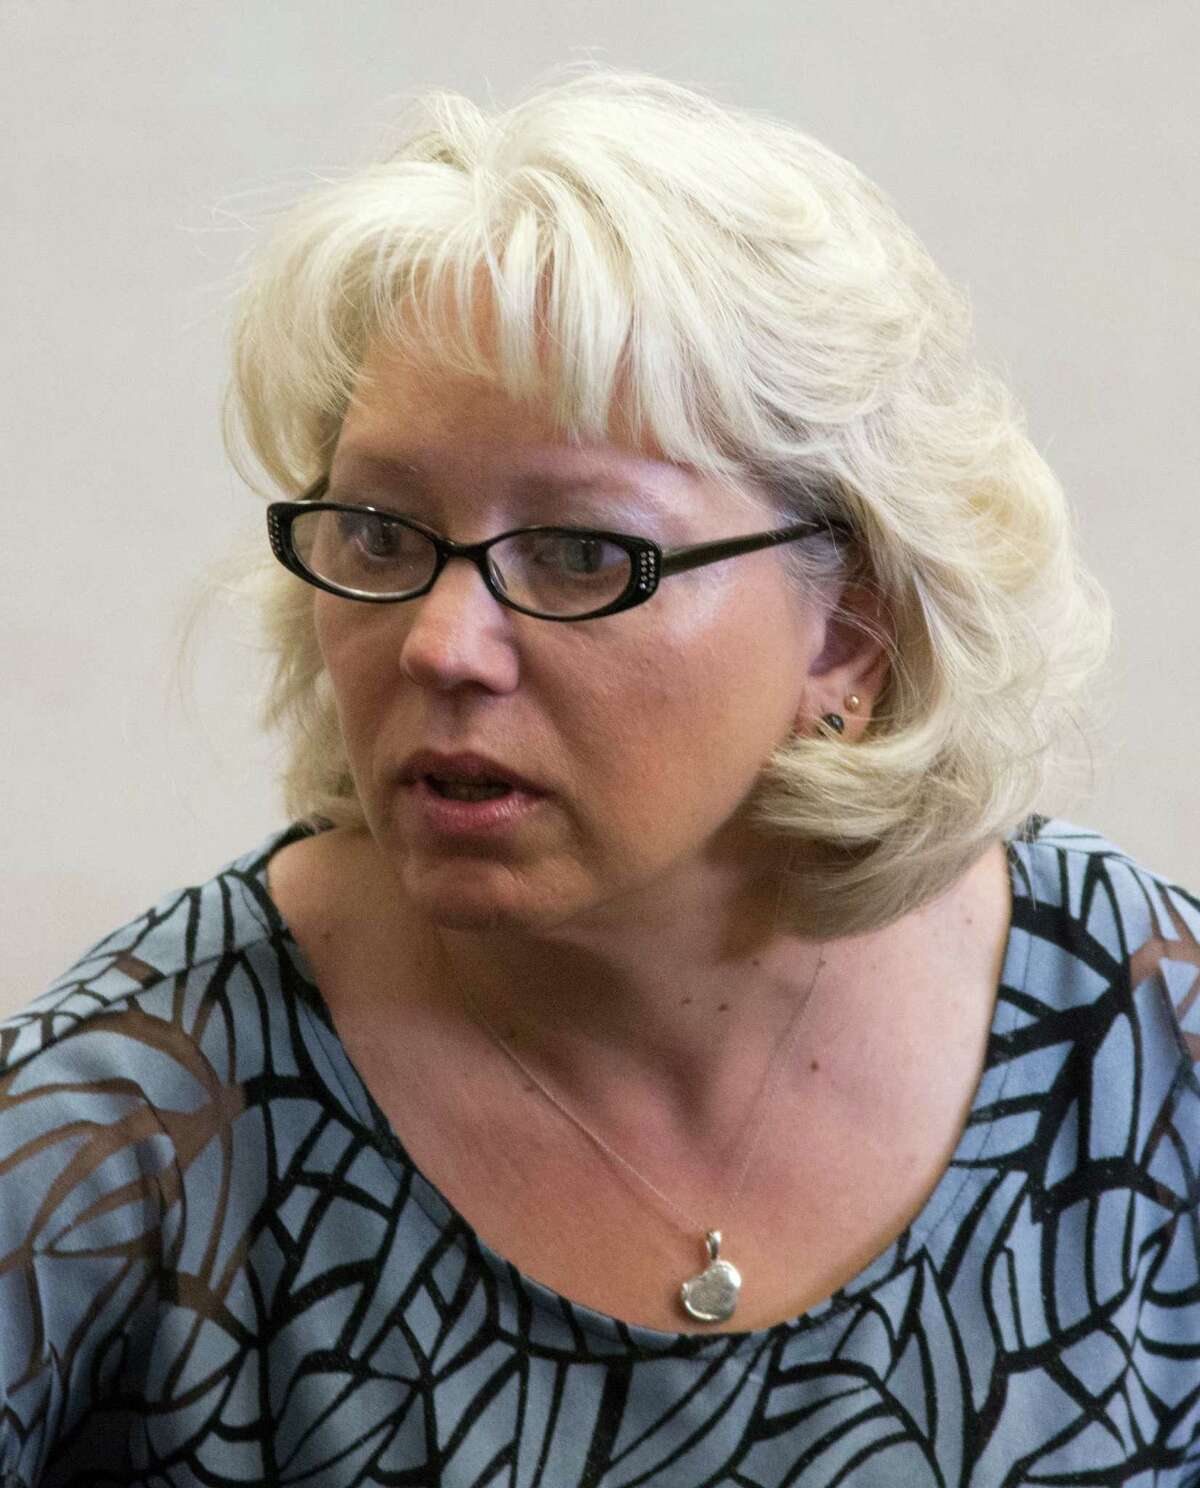 Debra Milke was convicted on “flimsy evidence,” a court said.